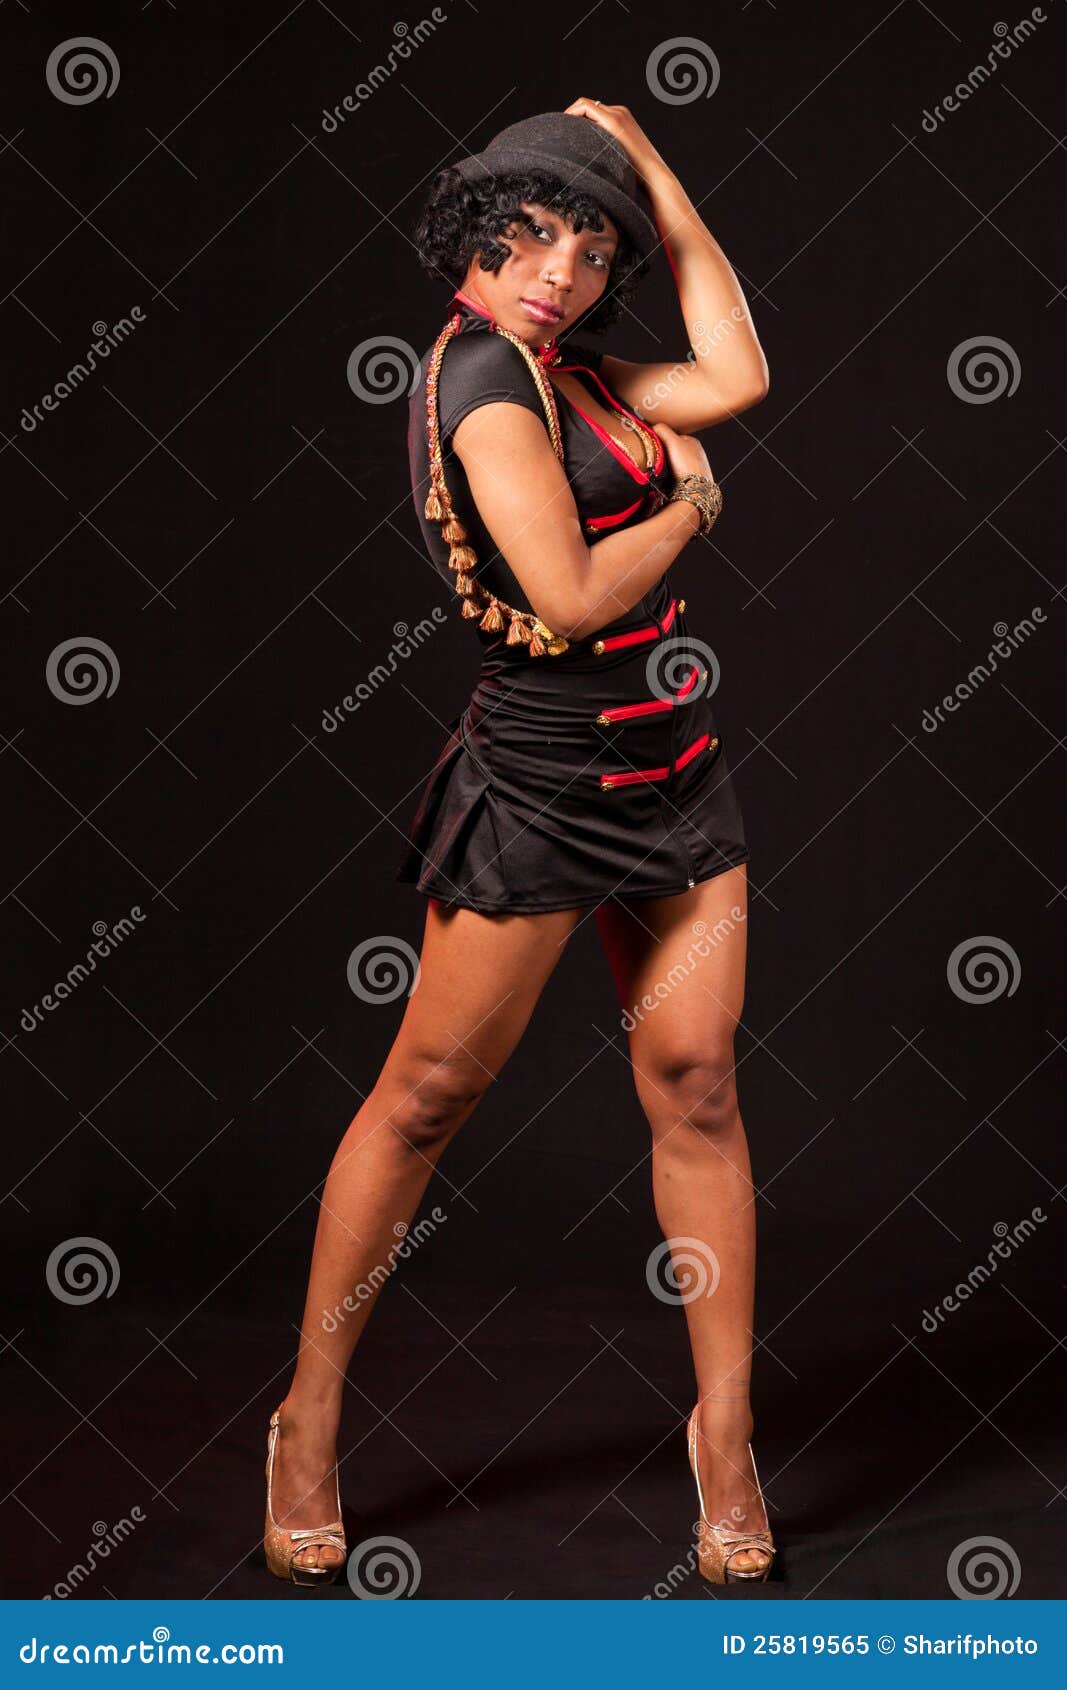 Burlesque Dancer In Seductive Pose Stock Image - Image 